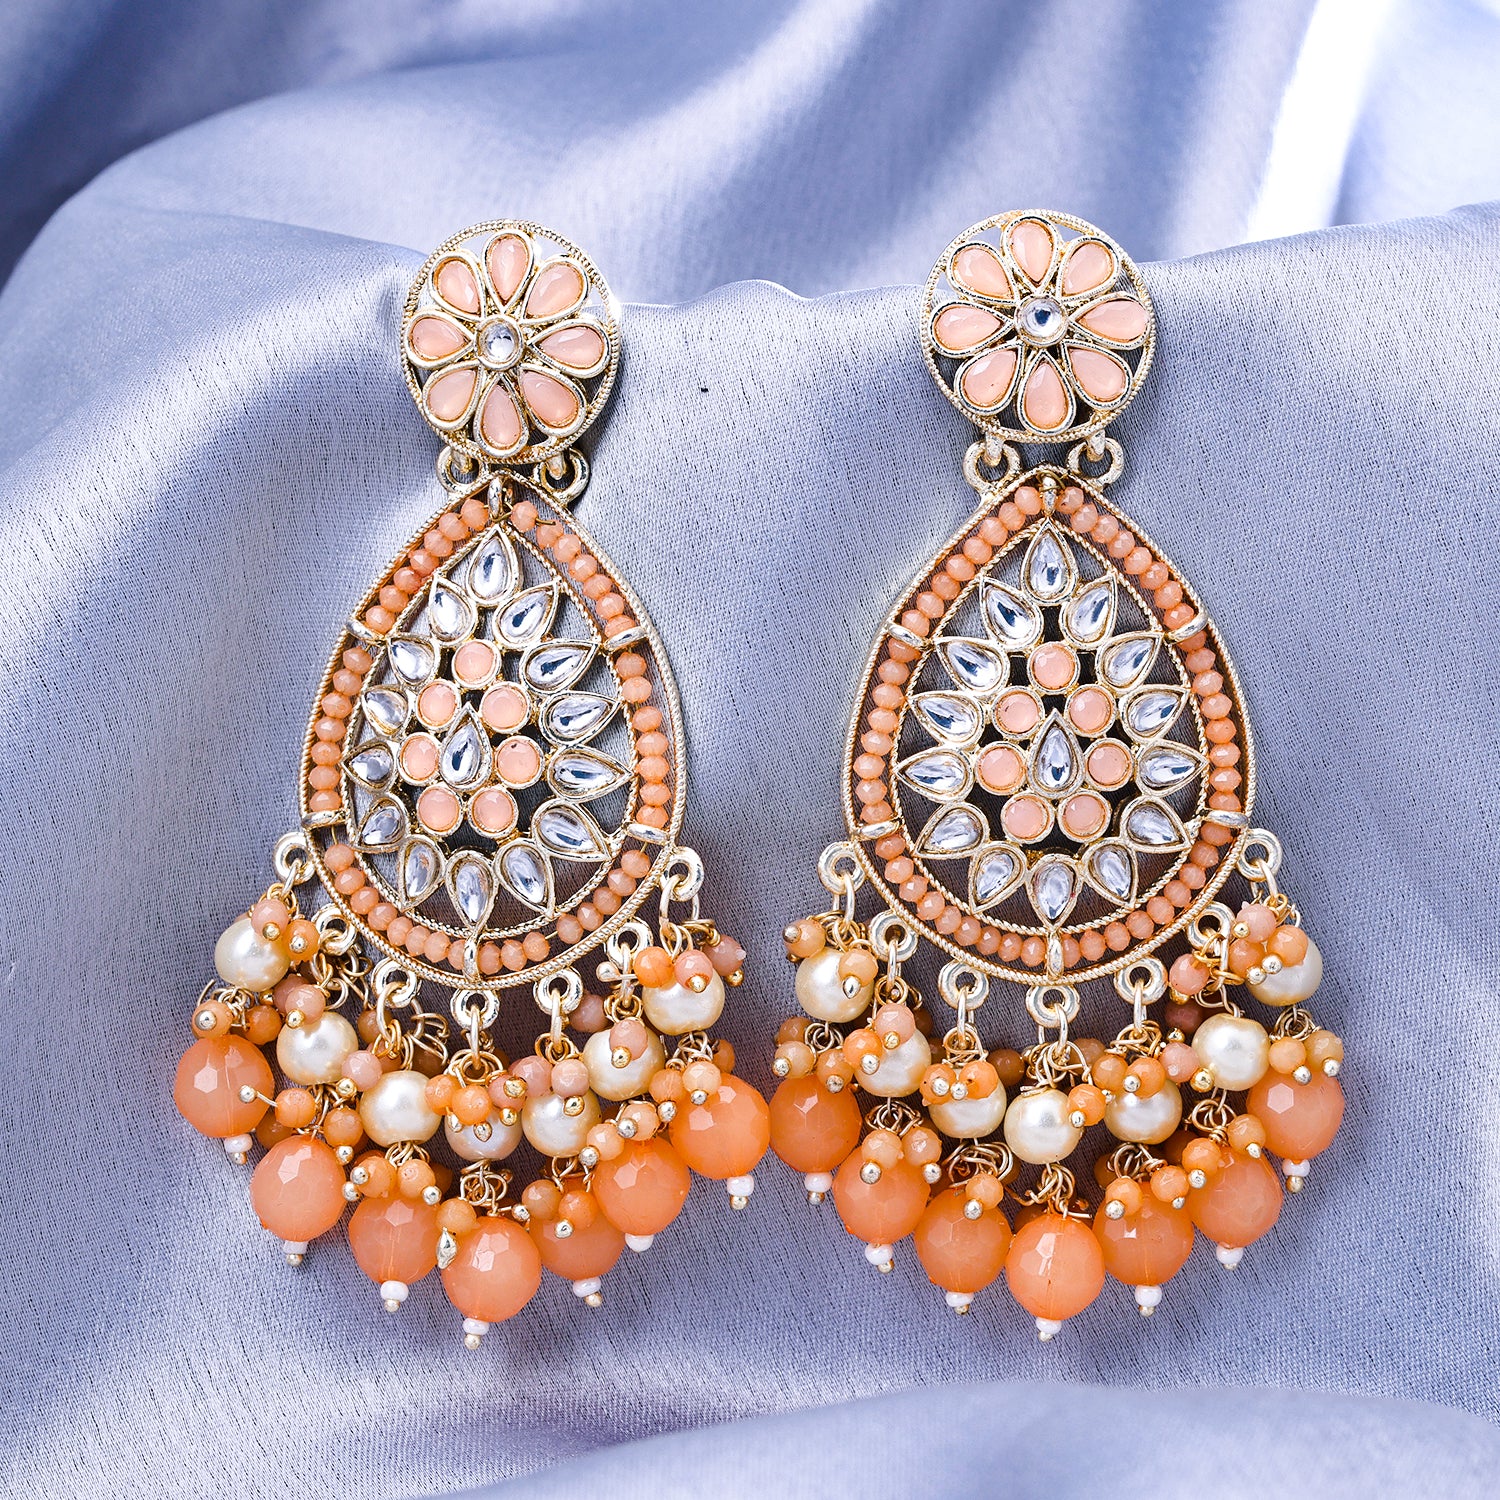 Buy Orange Gold Plated Kundan Earrings with Pearls Online at Jayporecom